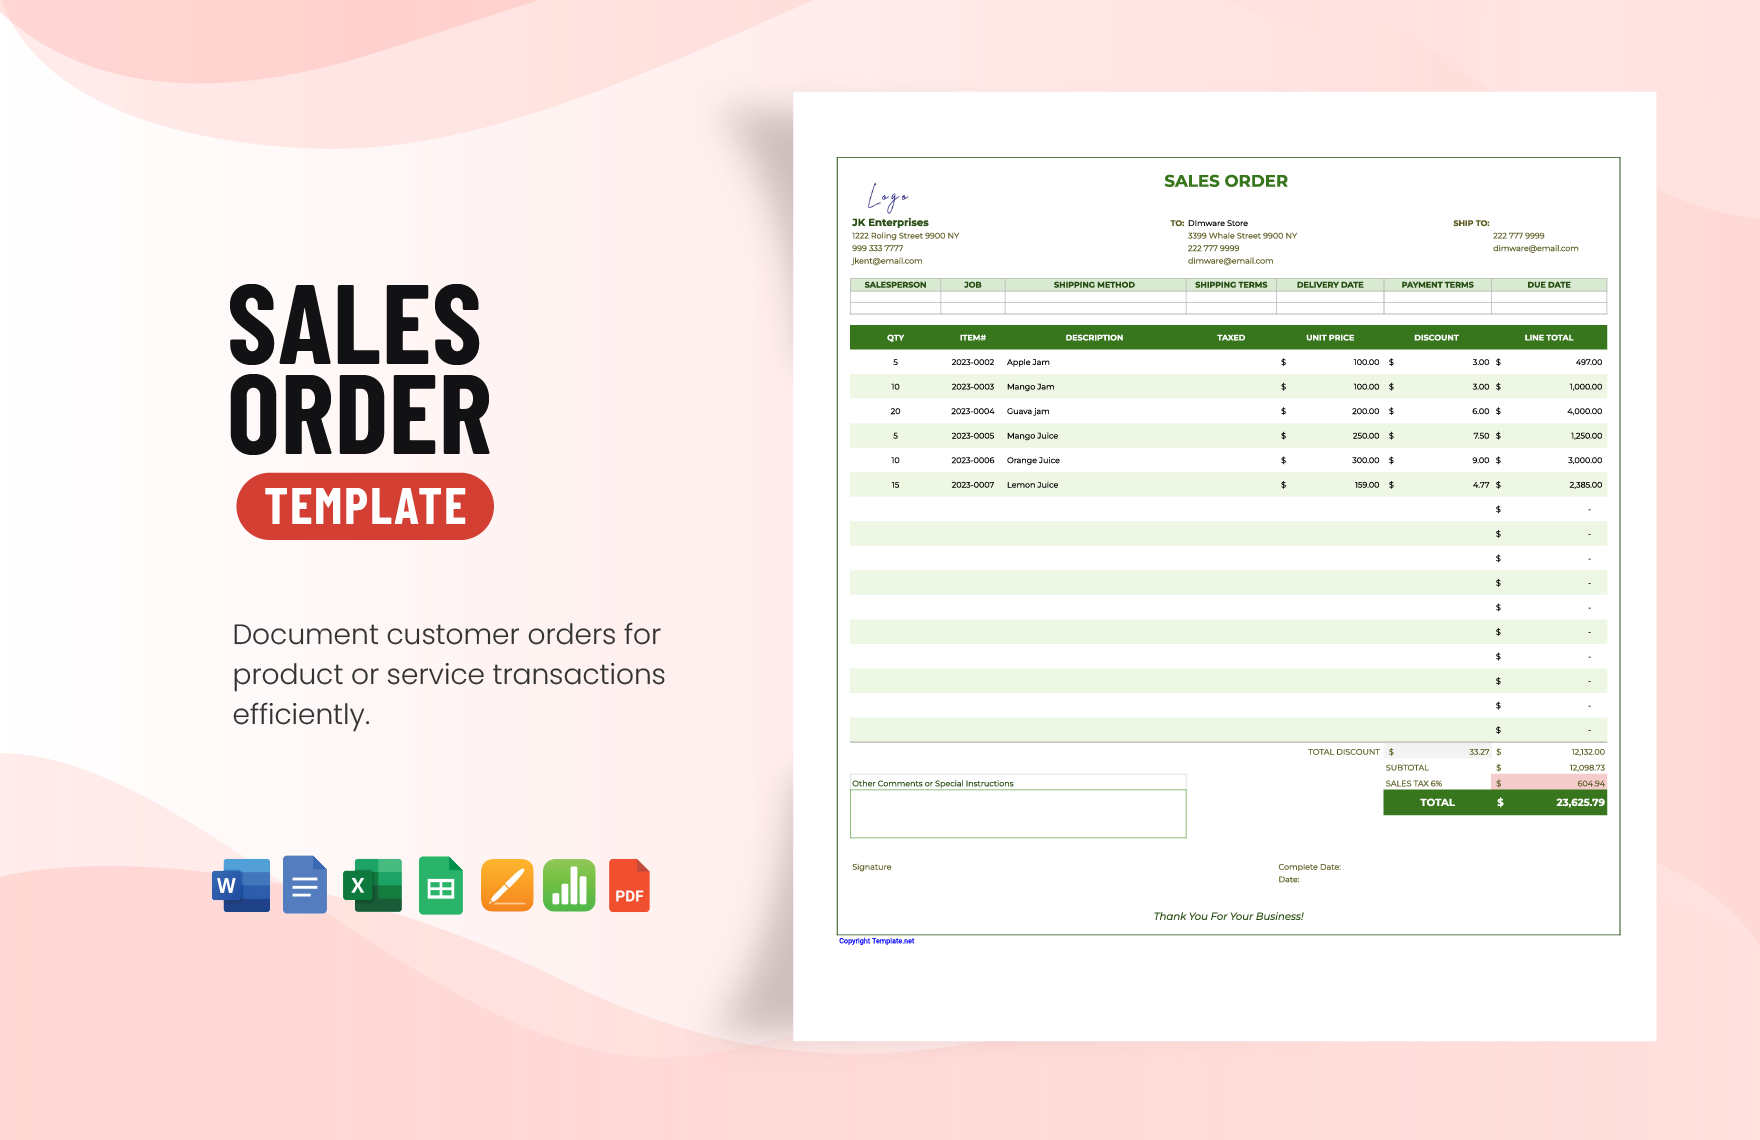 Sales Order Template